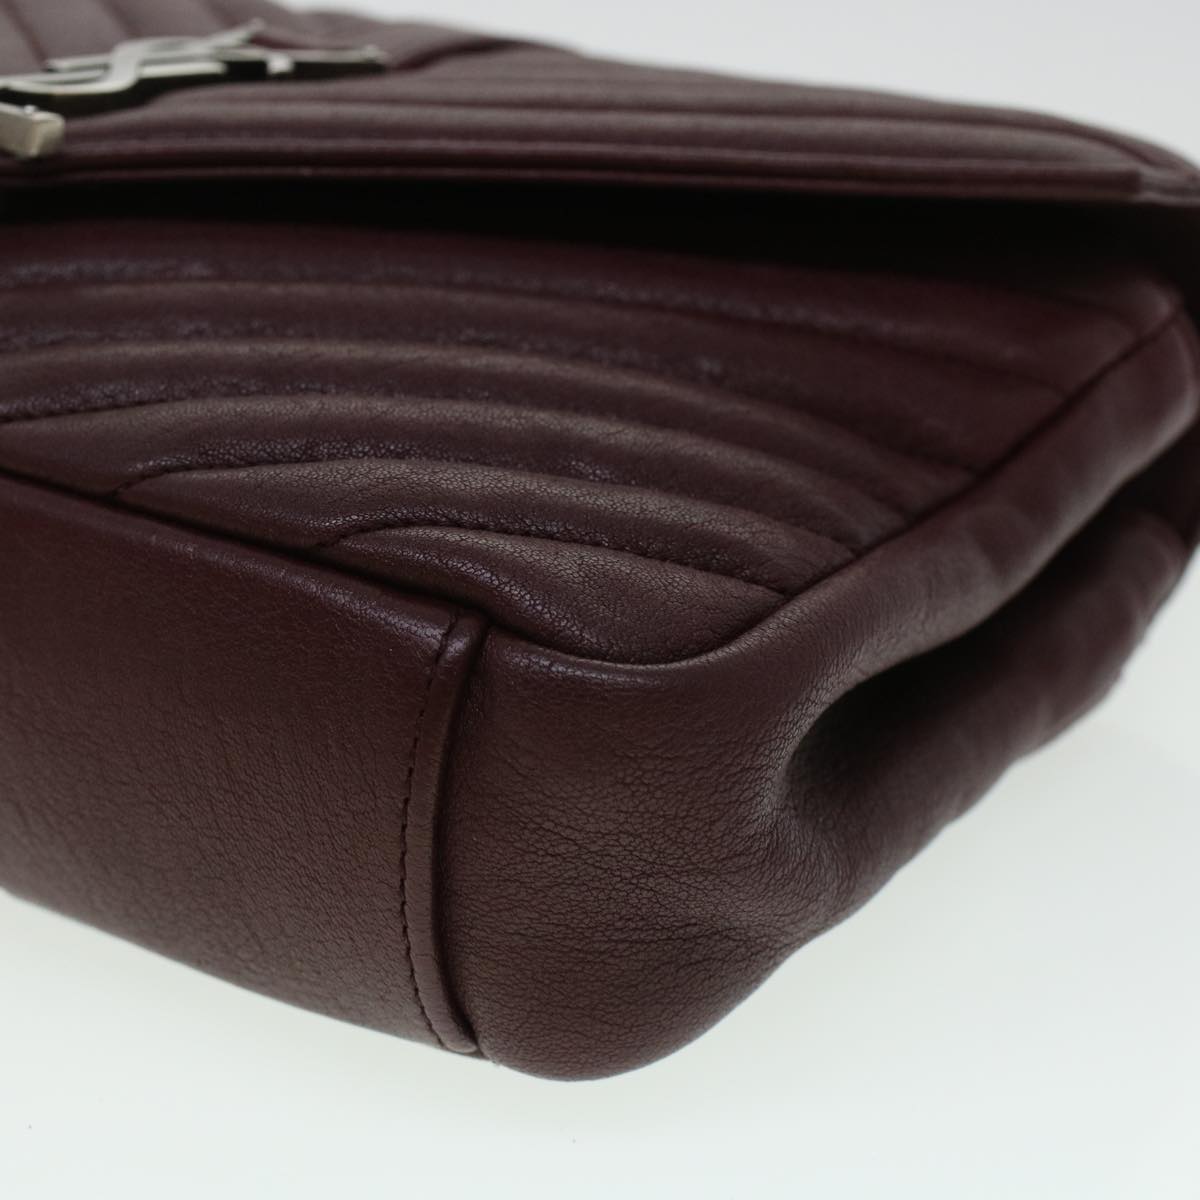 Saint Laurent Chain Shoulder Bag Leather Red 487213 Auth 44989a